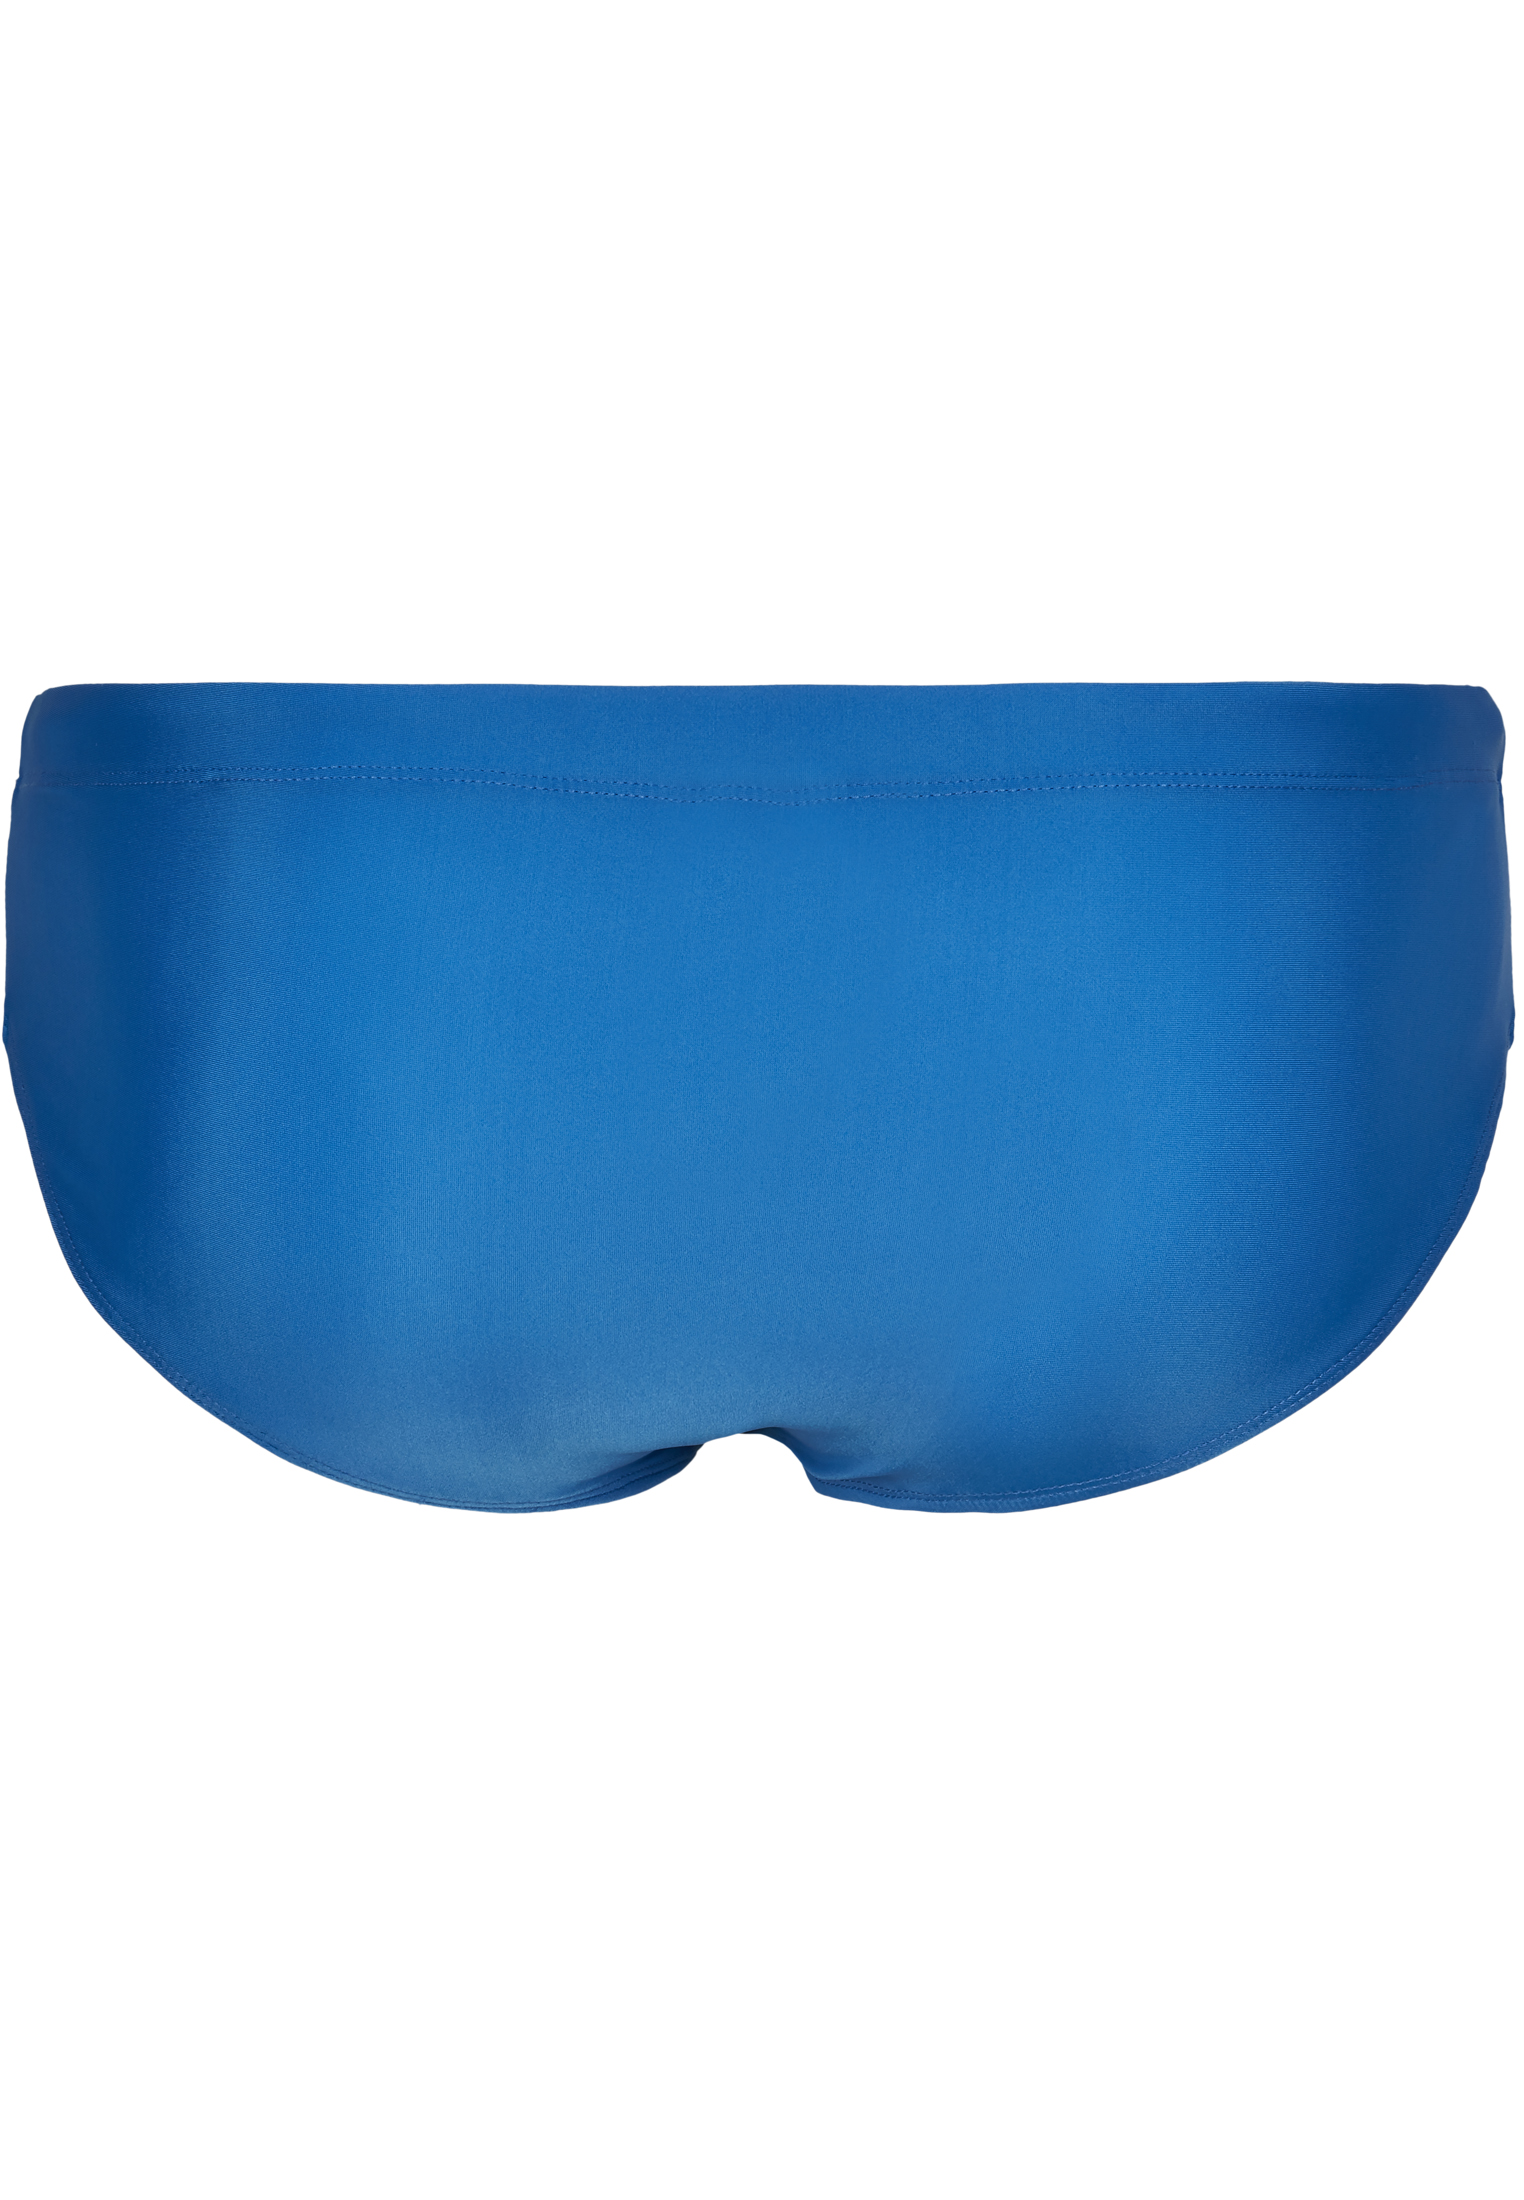 Bademode Basic Swim Brief in Farbe cobalt blue